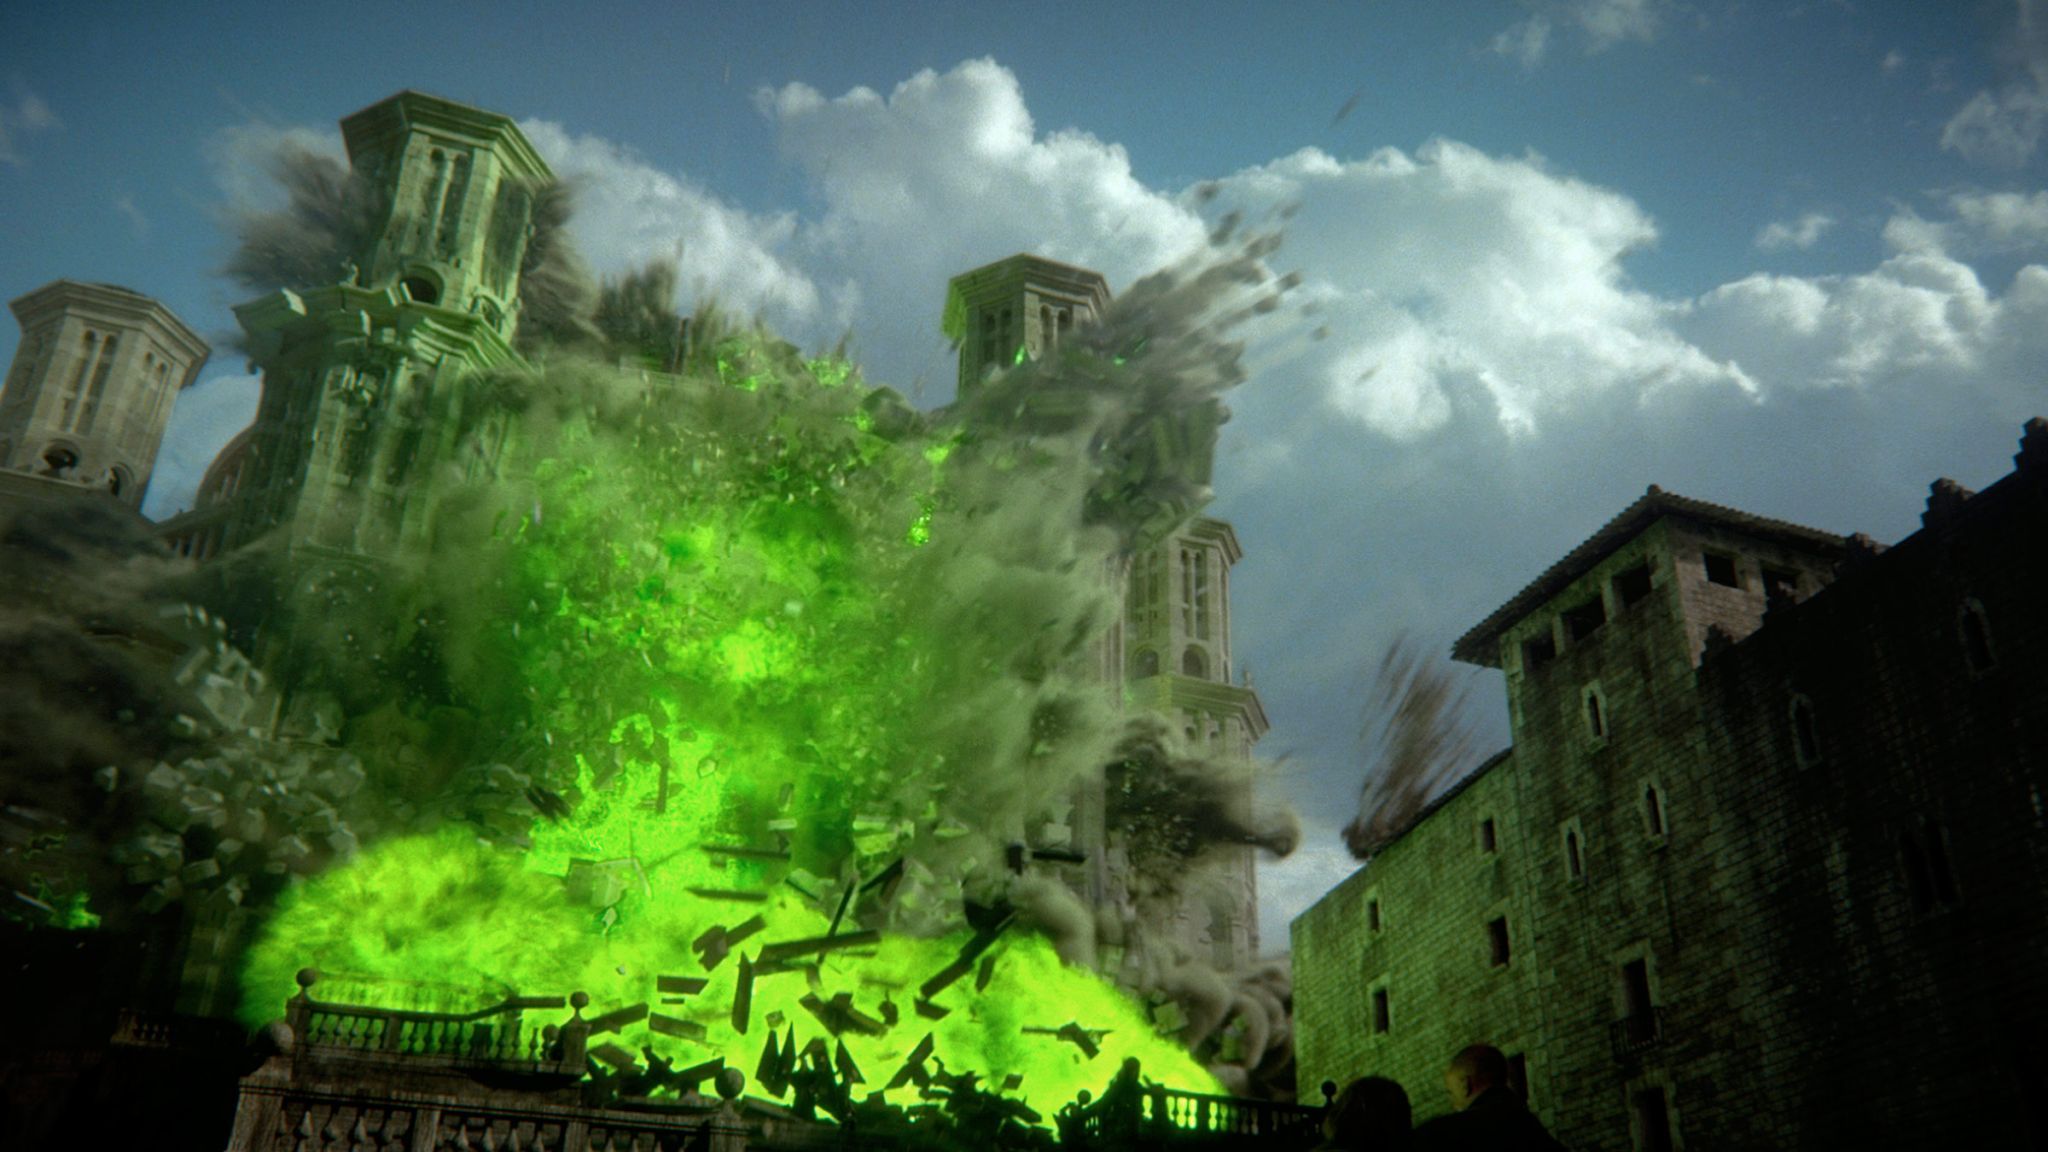 Game of Thrones Video Explores Season 6 Visual Effects Magic